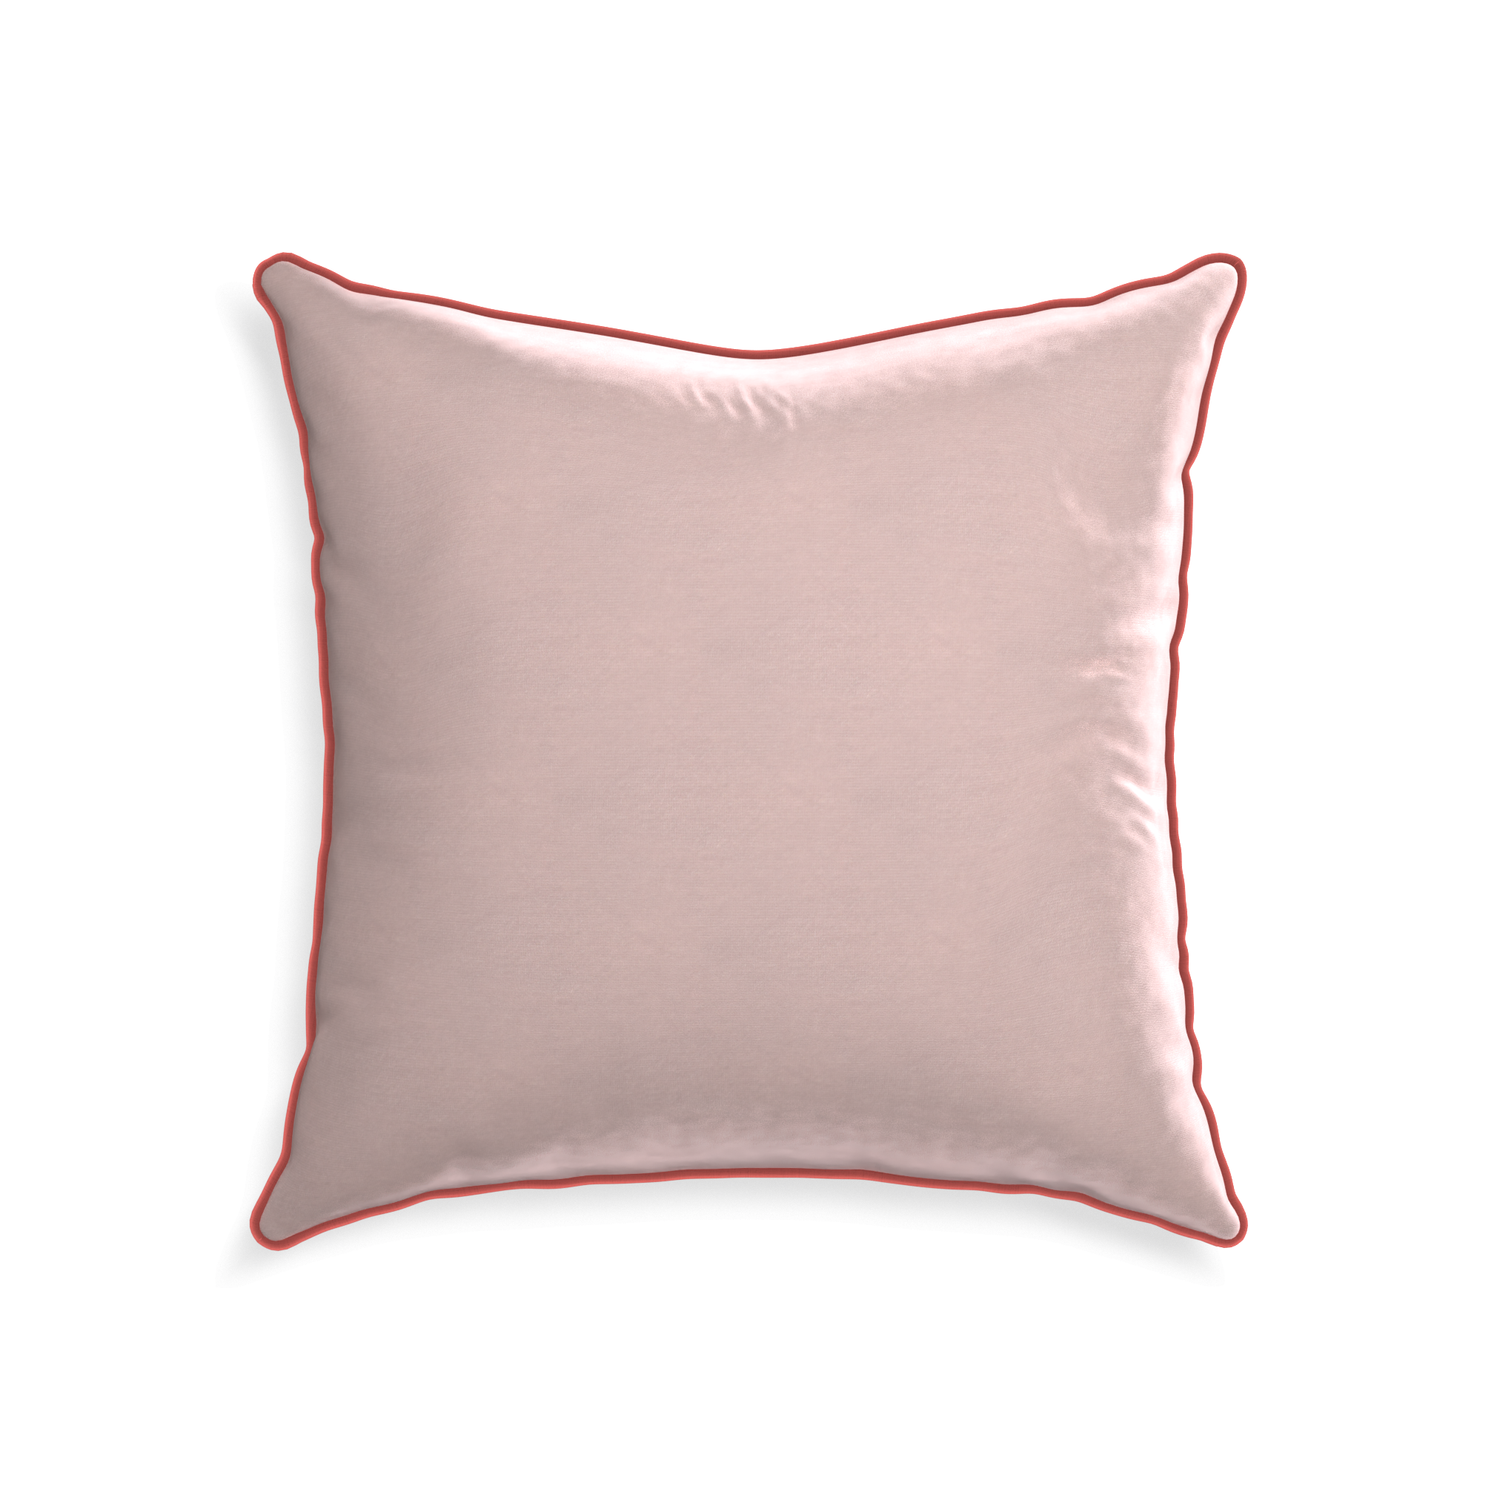 22-square rose velvet custom pillow with c piping on white background